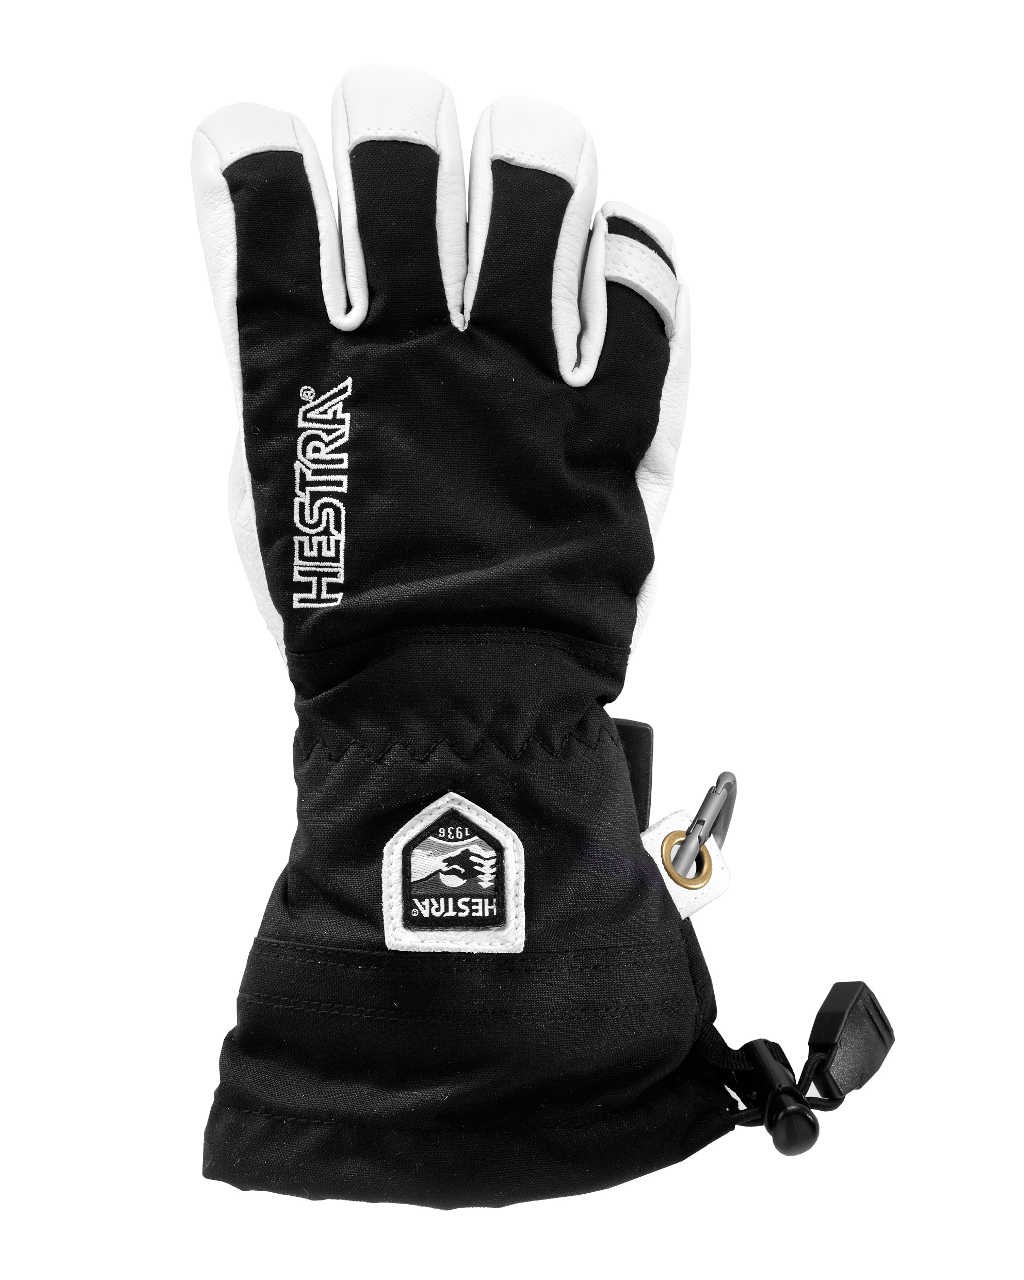 skistar.com | Army Leather Heli Ski JR - 5 Finger Black